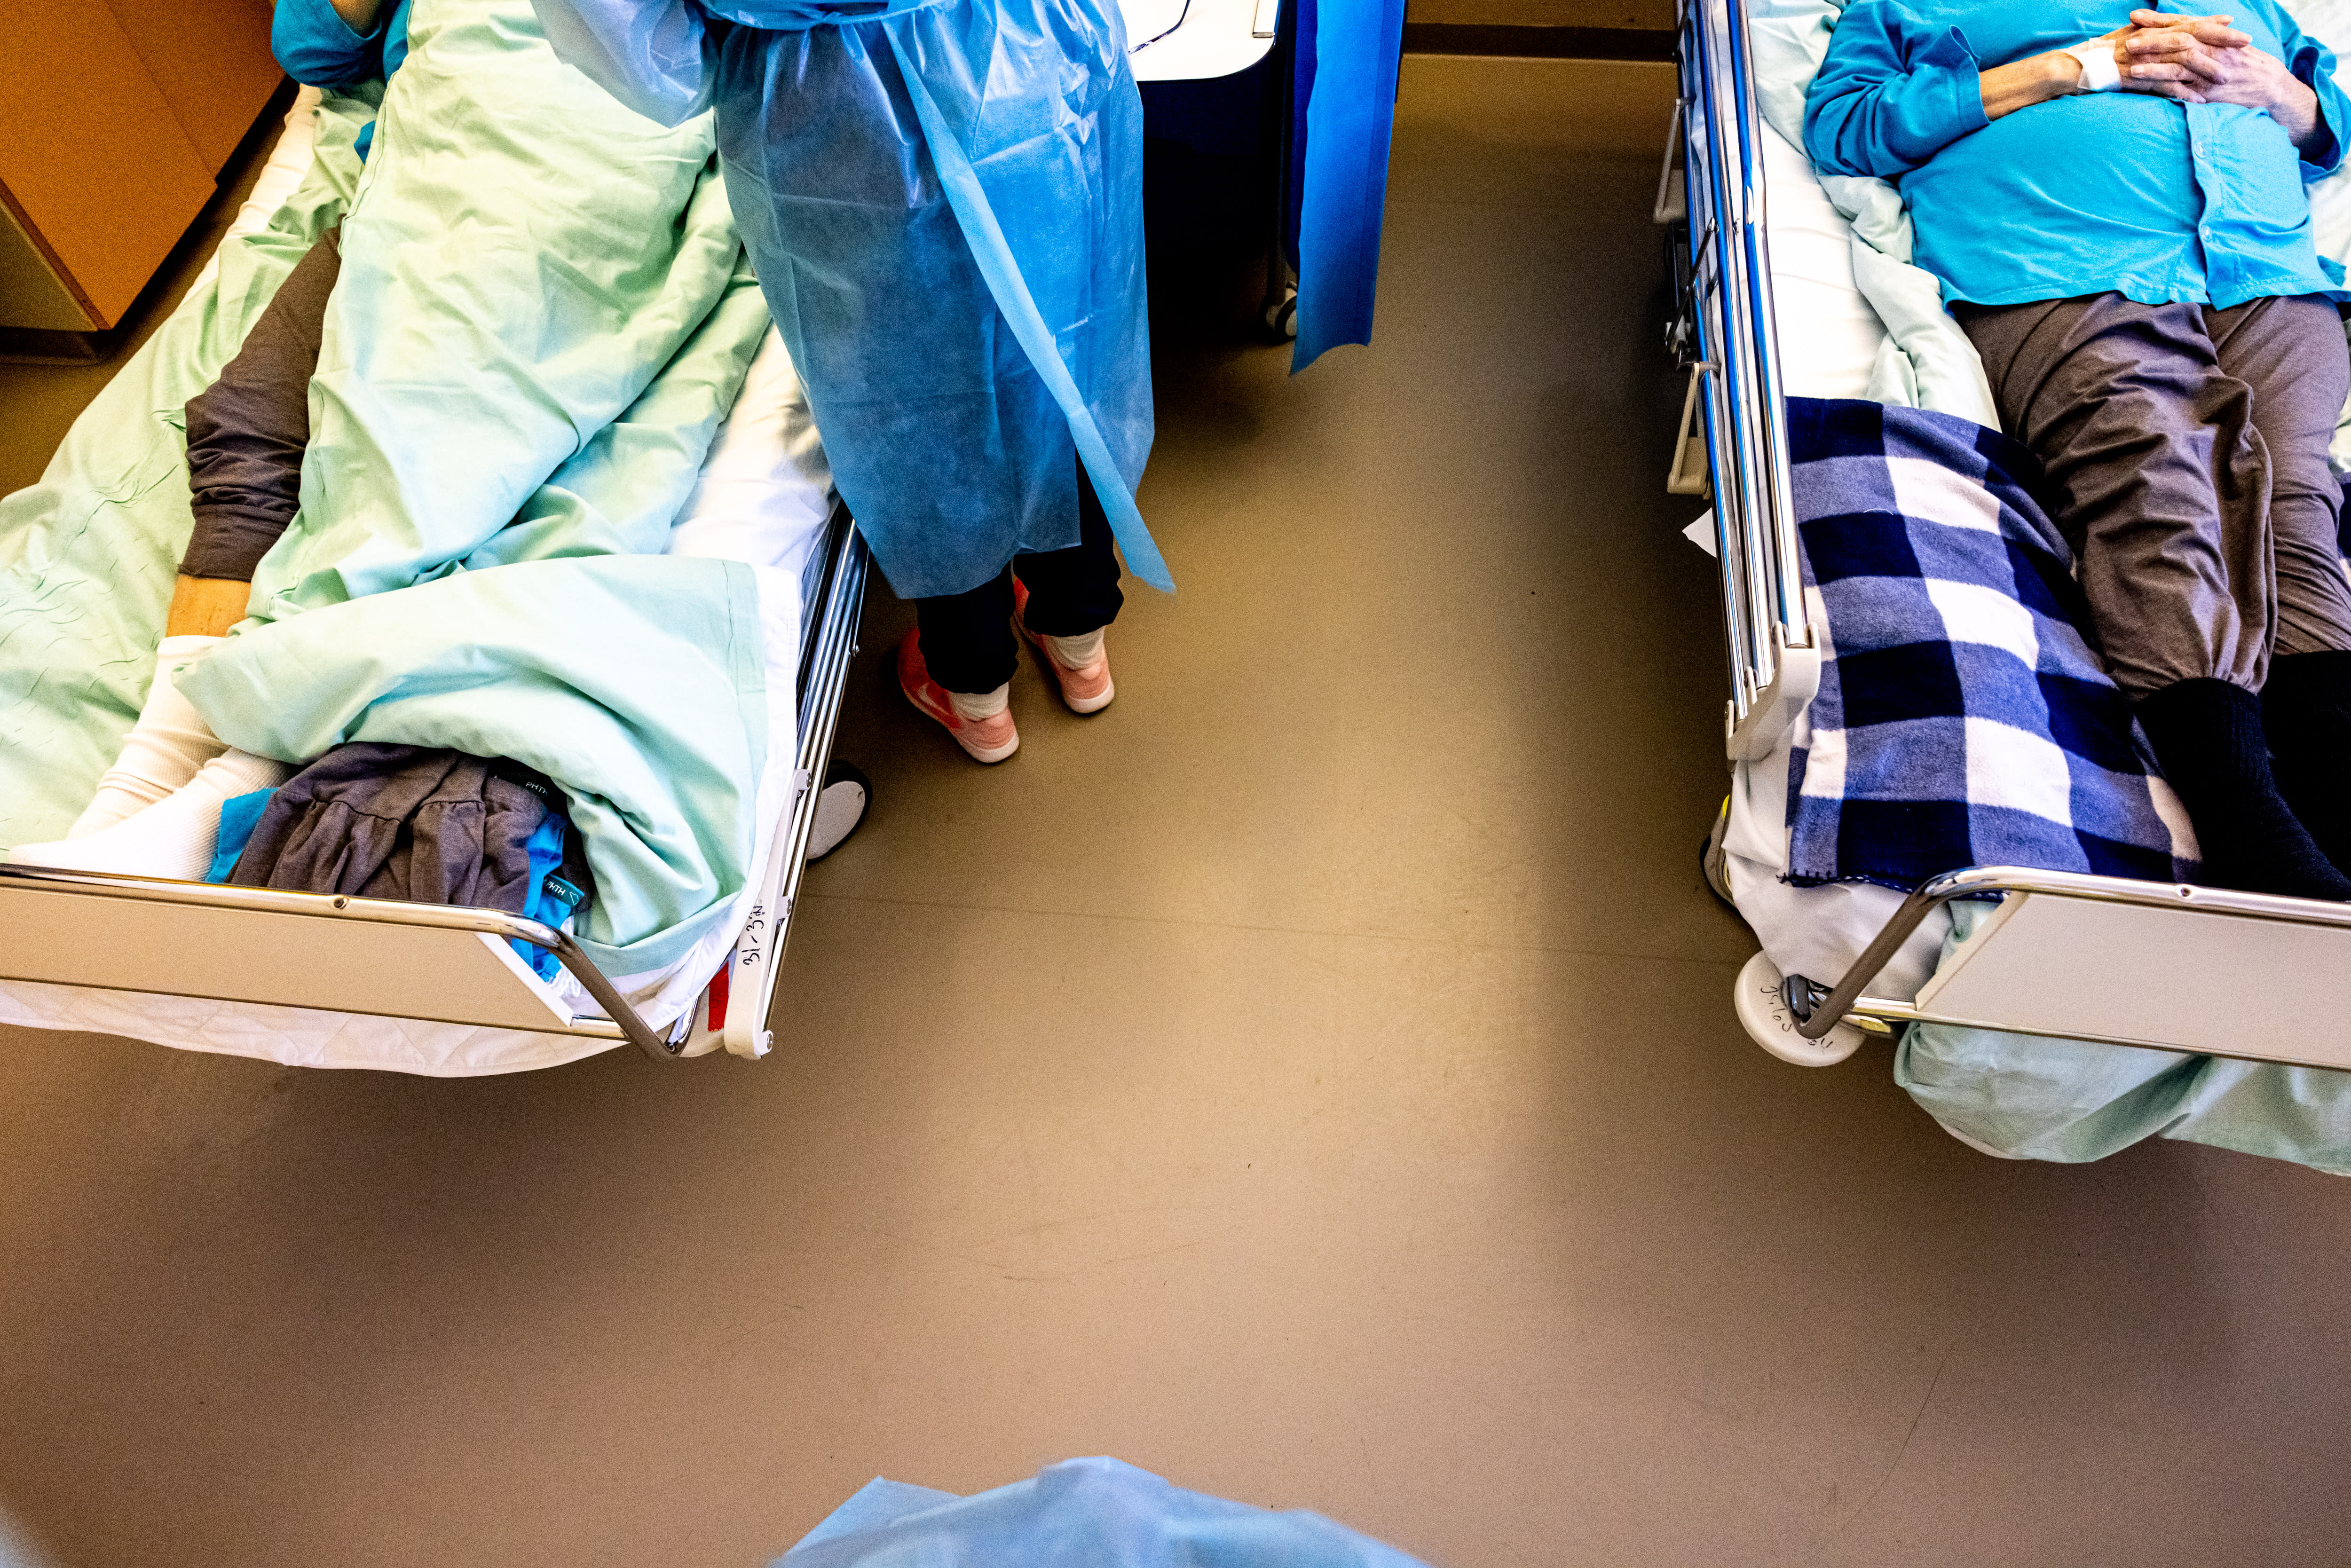 THL: Many Covid patients still need hospitalization, epidemic uncertain